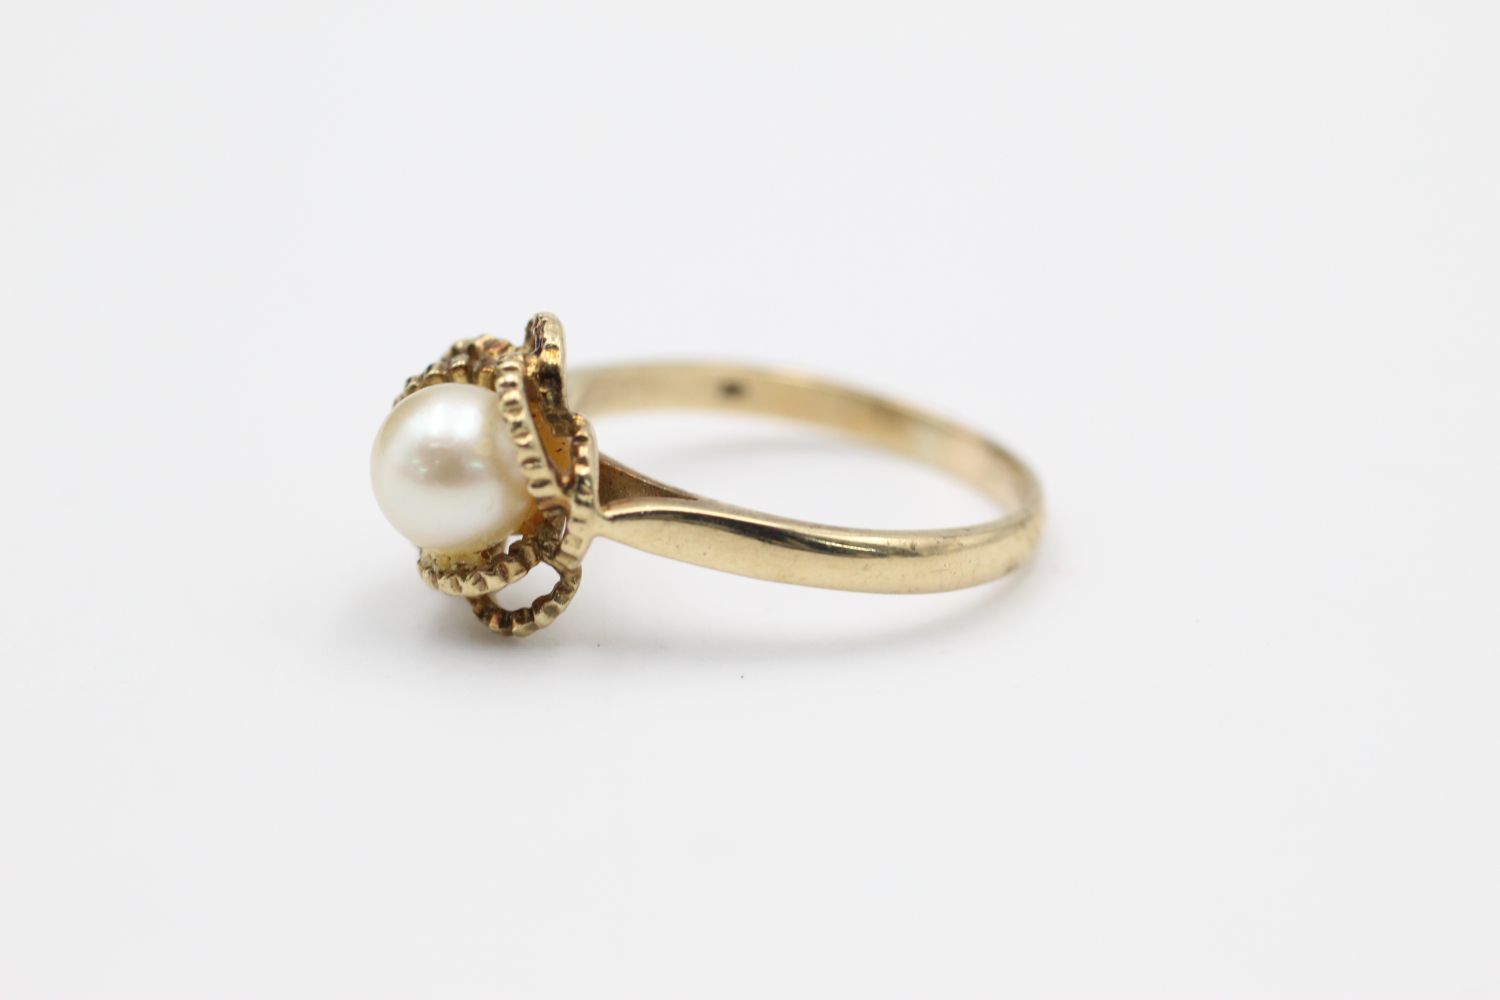 vintage 9ct gold central pearl floral design ring 2.9 grams gross - Image 2 of 5